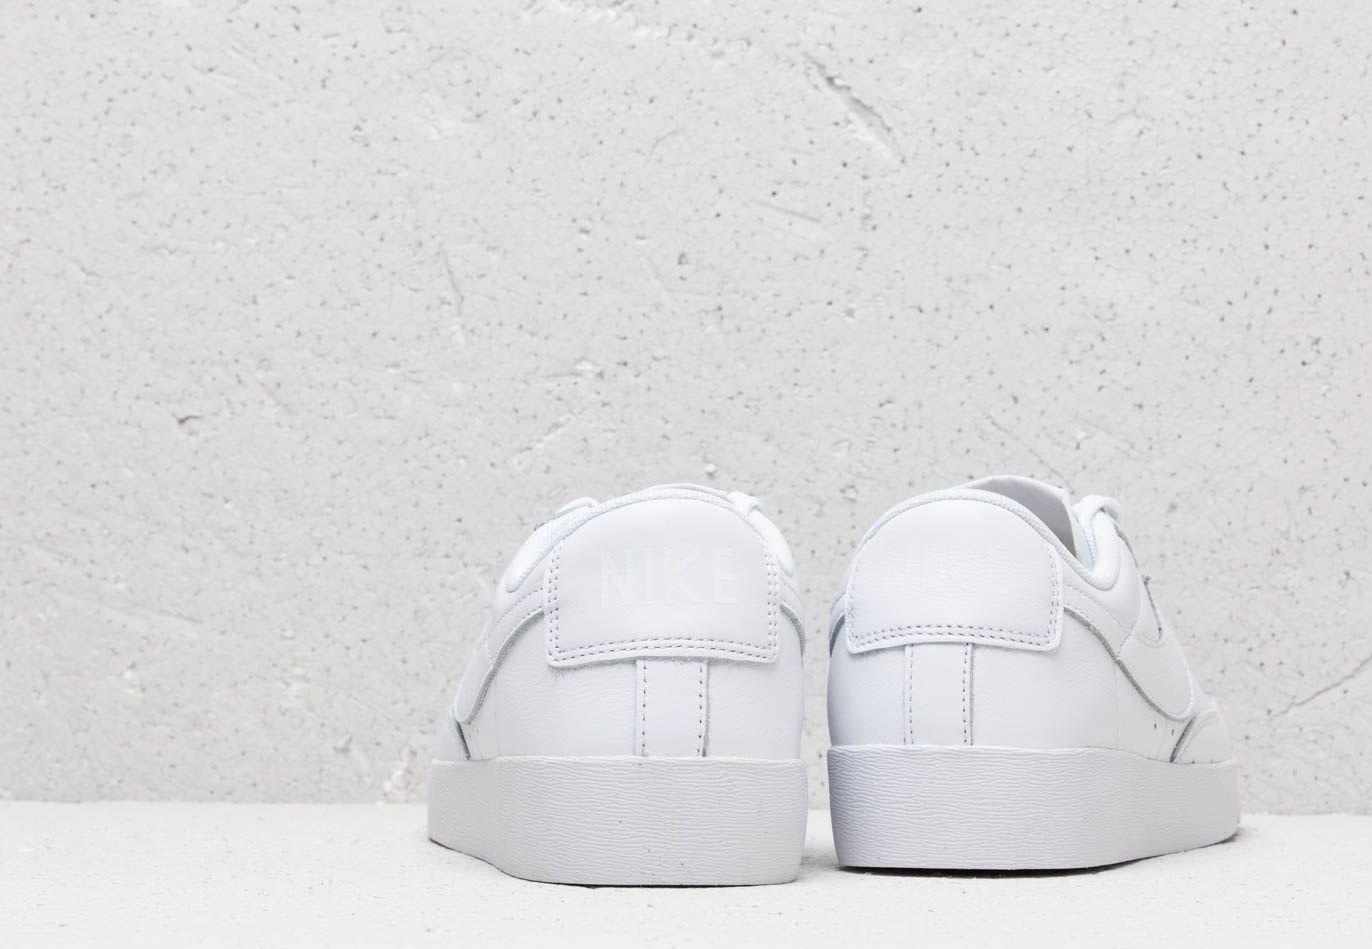 Nike Leather Blazer Low Le Shoes in White,White,White (White) | Lyst